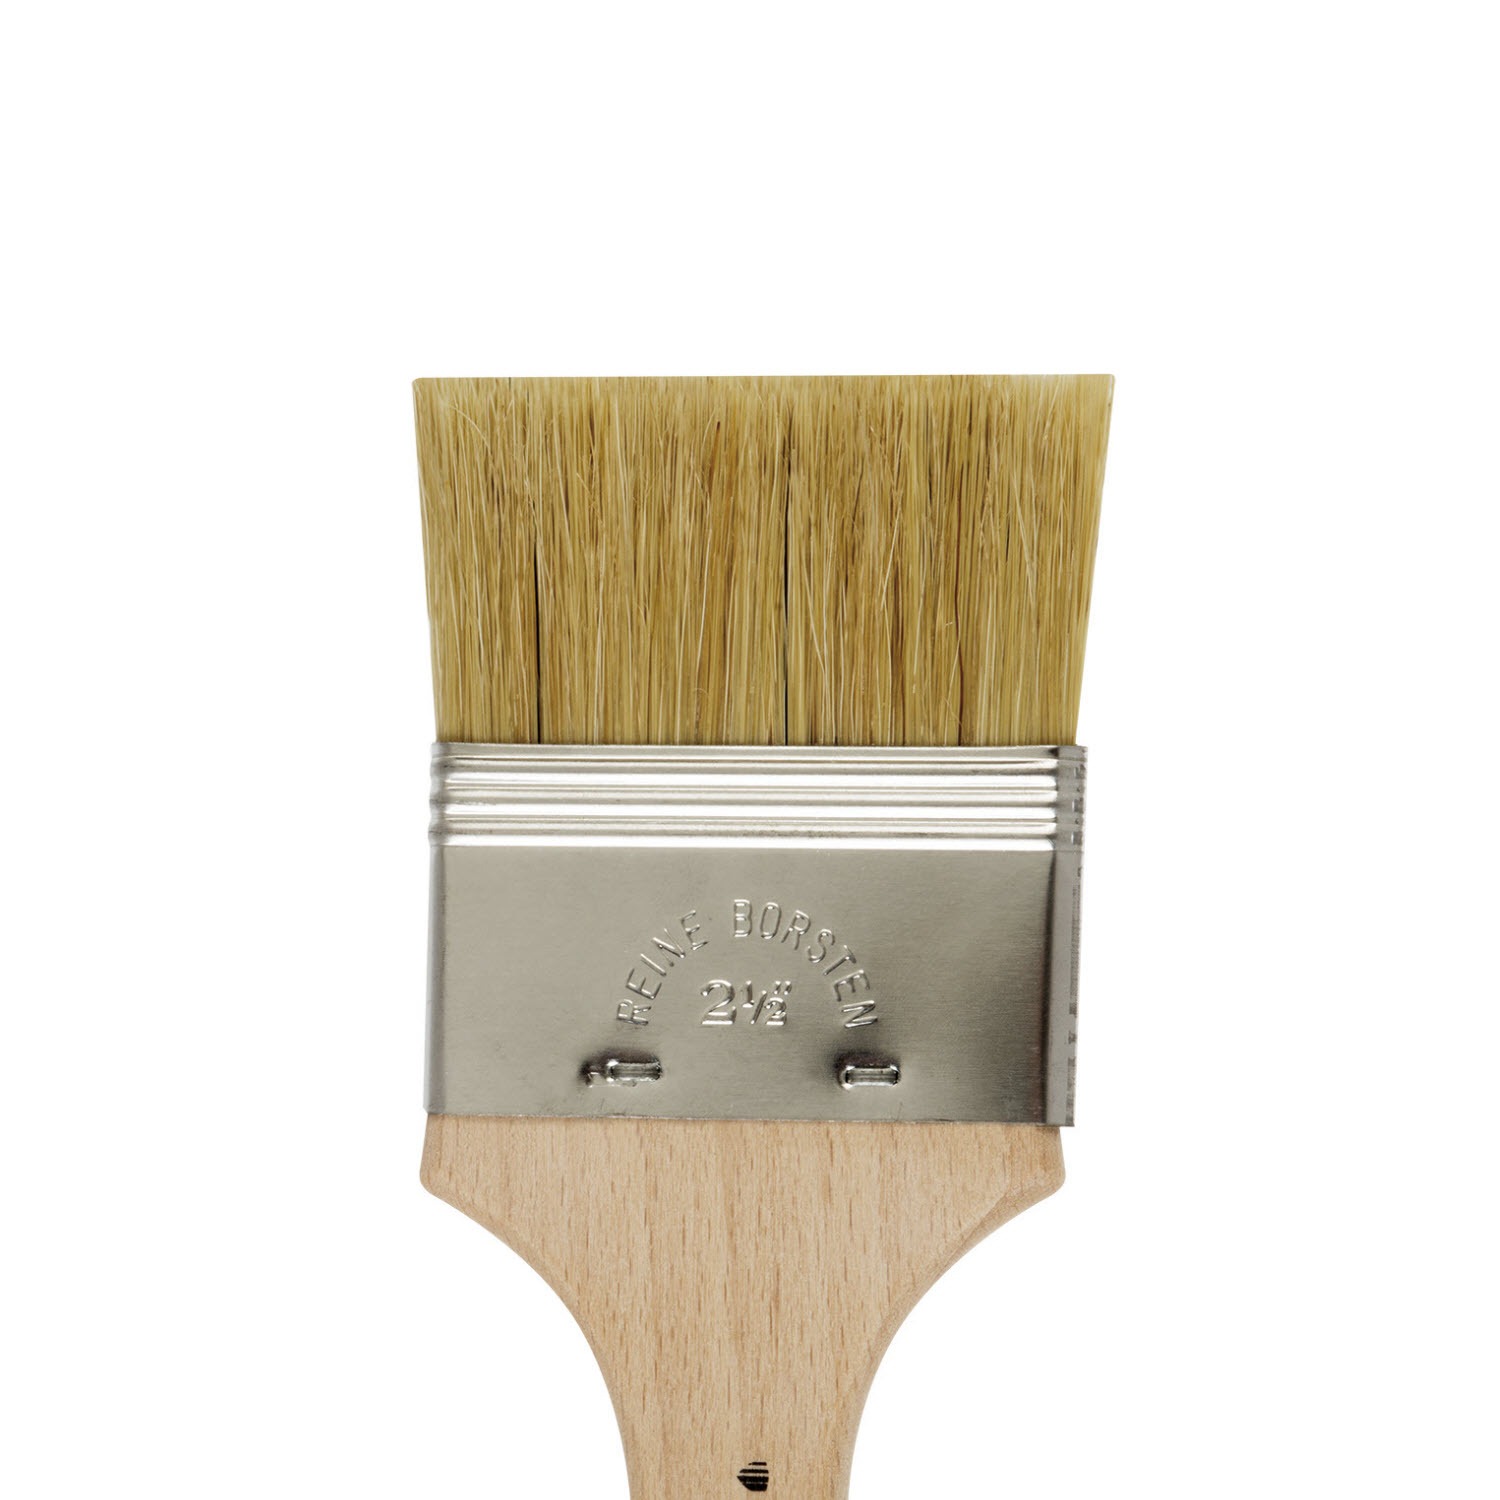 Acrylic & Varnish Brush - Natural Bristle - lineo1911 - Artist Brushes